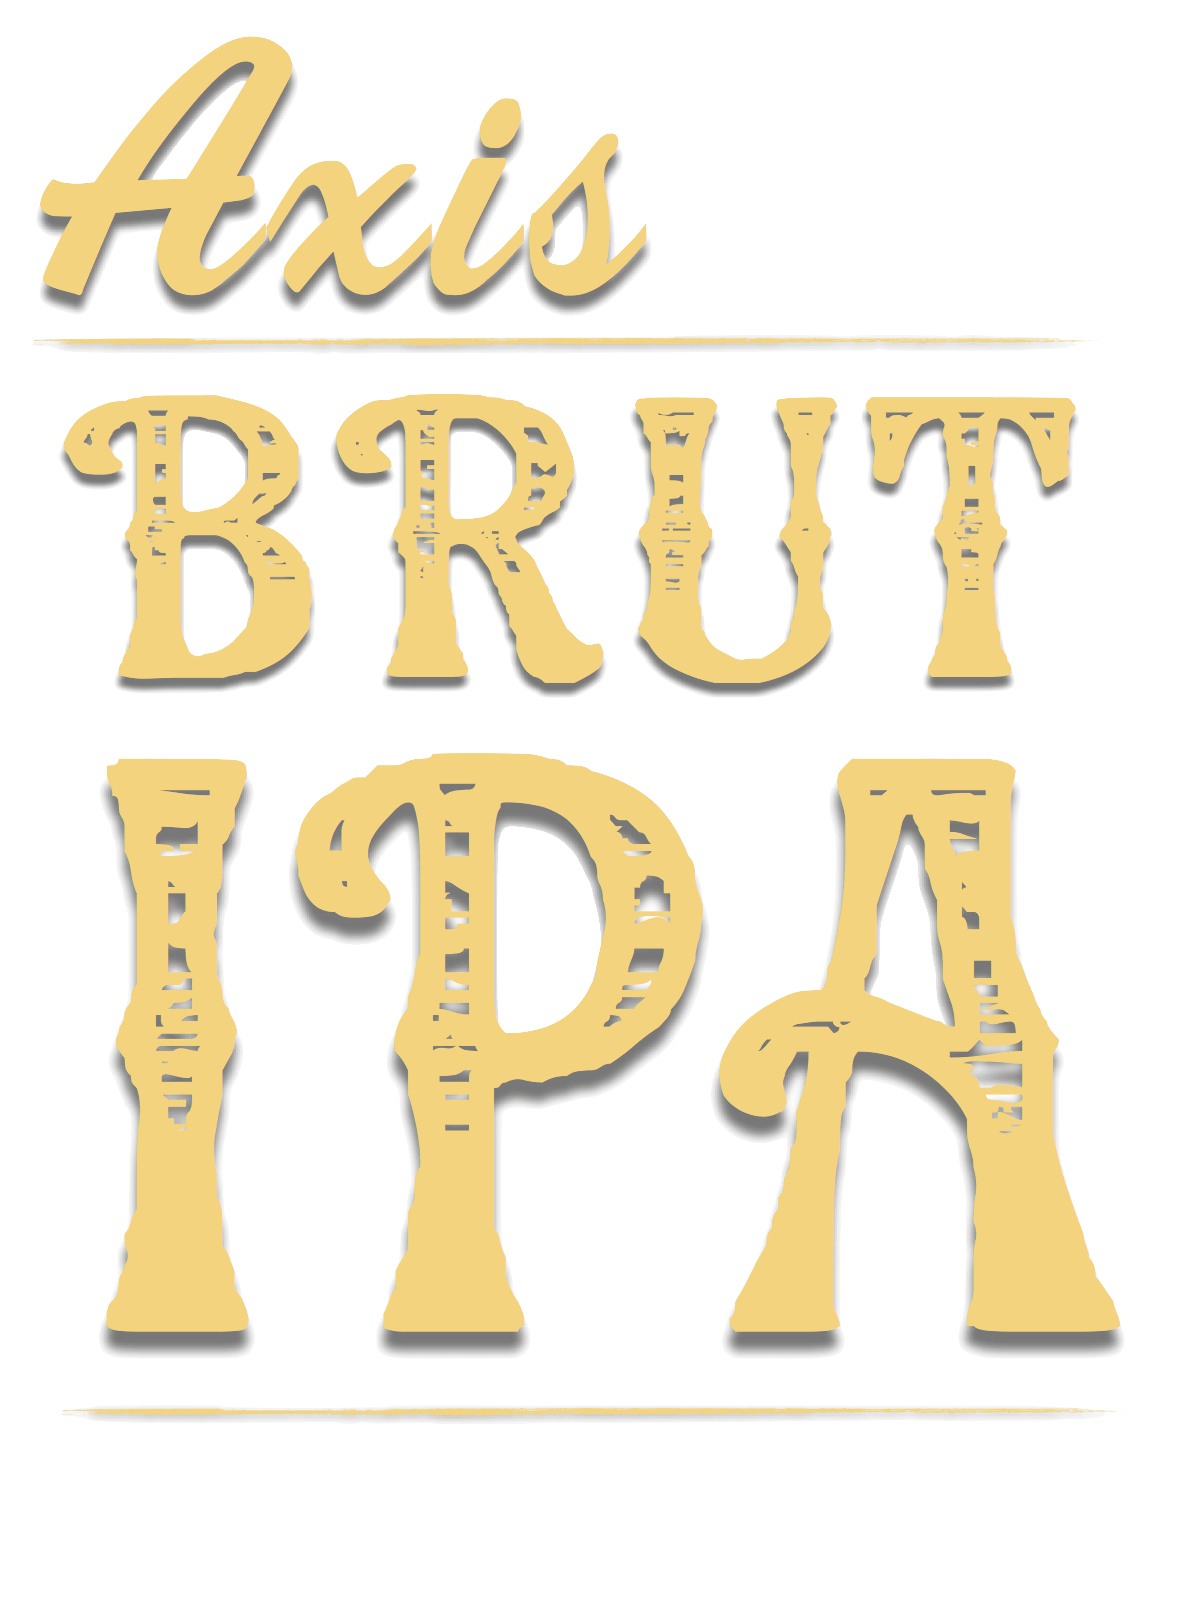 IPA Beer Logo - Seas Brewing